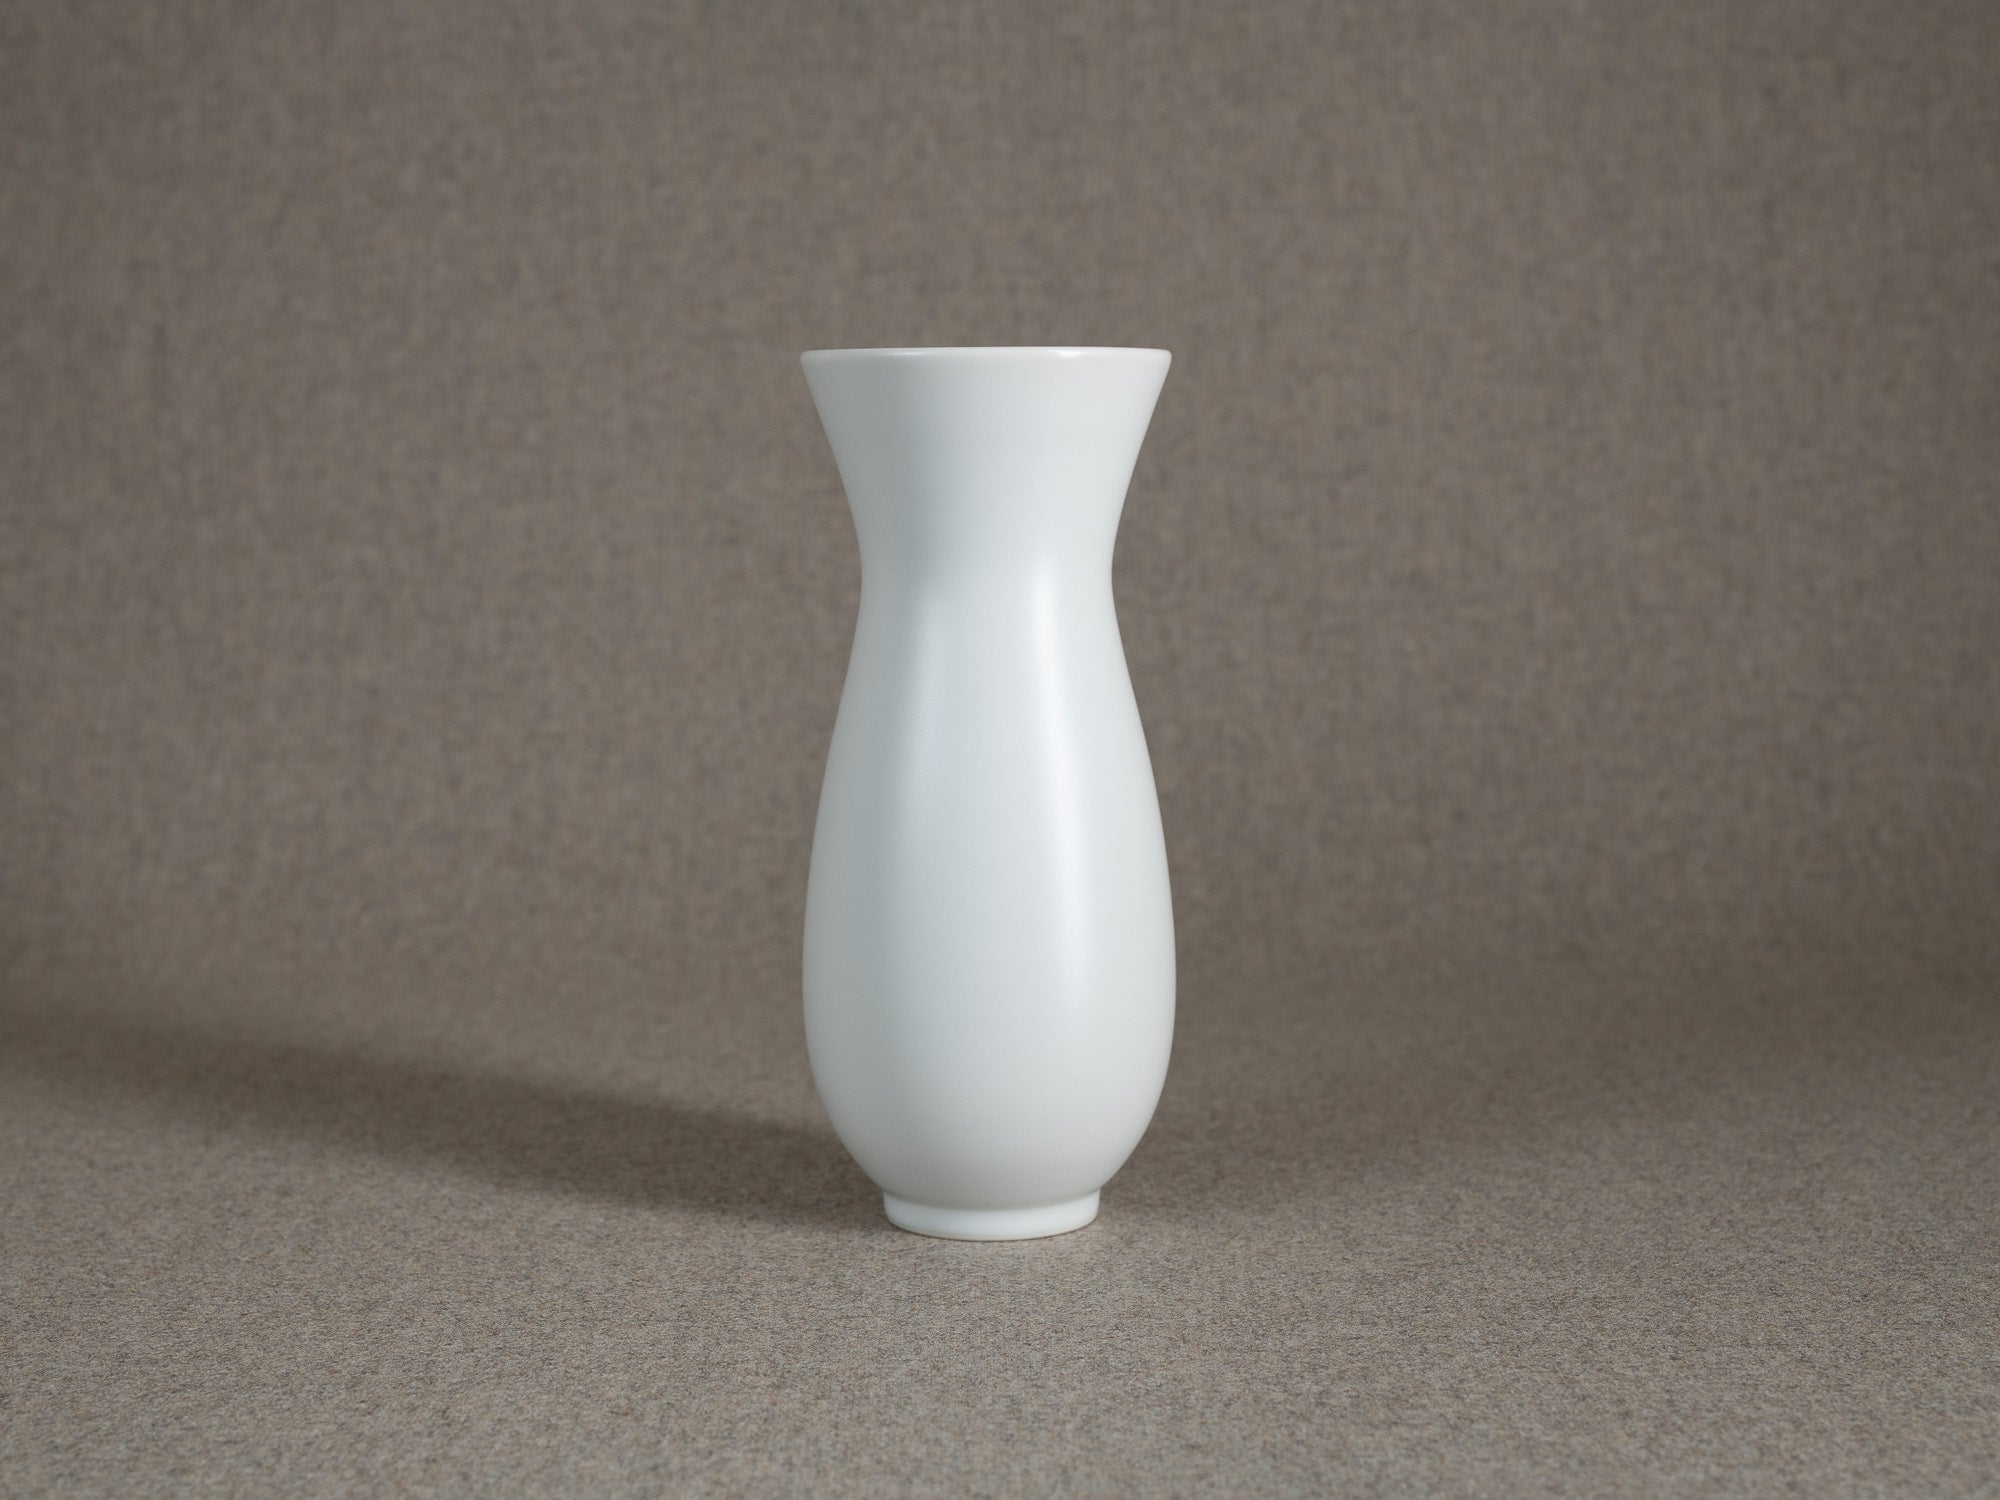 Vase en porcelaine par le Maître 四代 永澤永信 Nagasawa Eishin  IV, Japon (années 1980)..Porcelain vase by blu-ribbon nitten potter Eishin Nagasawa IV 四代 永澤永信, Japan (1980s)